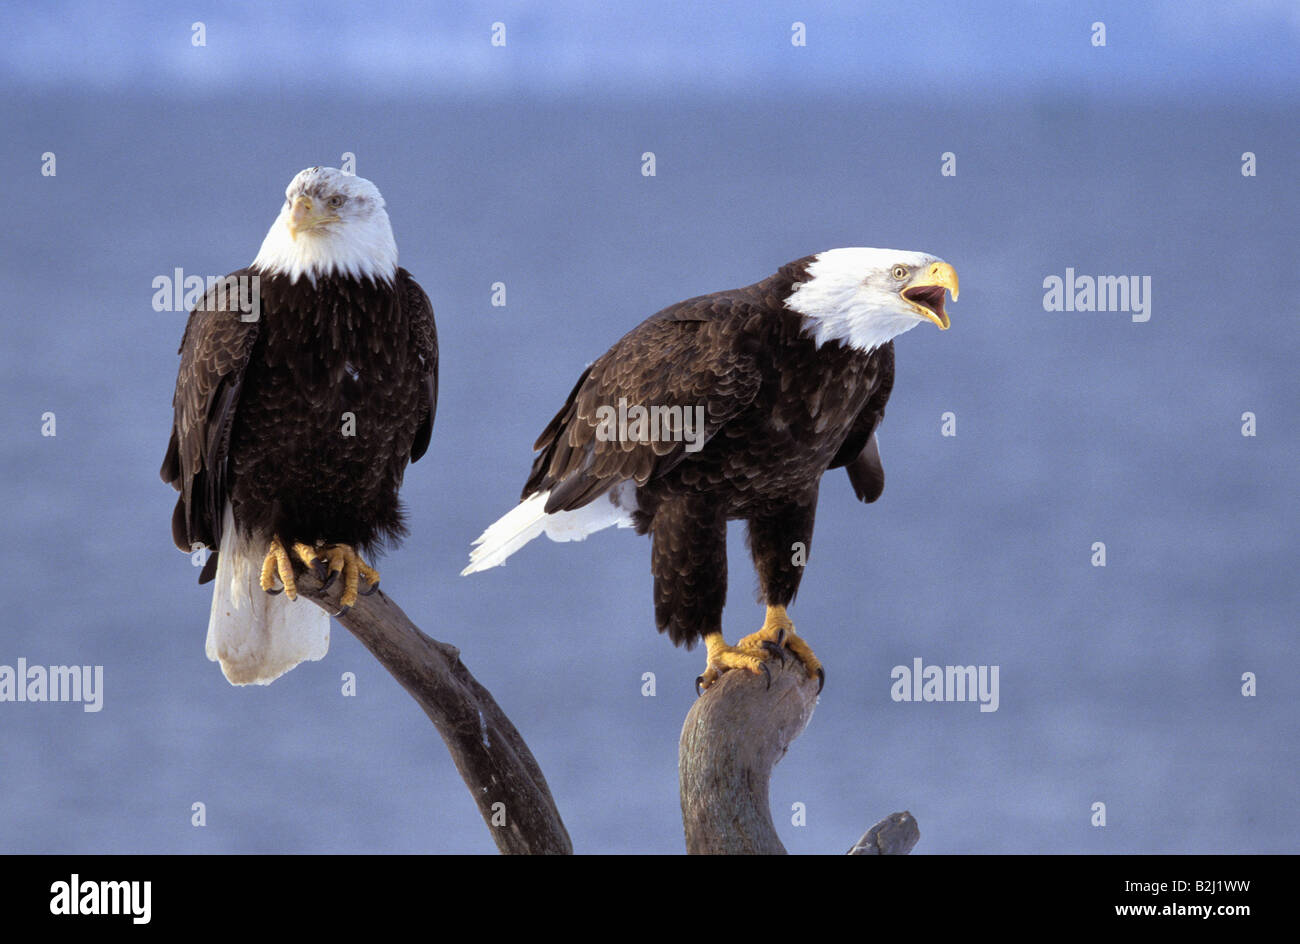 Zoologia / animali, uccelli / bird, Accipitridae, aquila calva (Haliaeetus leucocephalus), due aquile seduta su albero, Omero, Alaska, Foto Stock